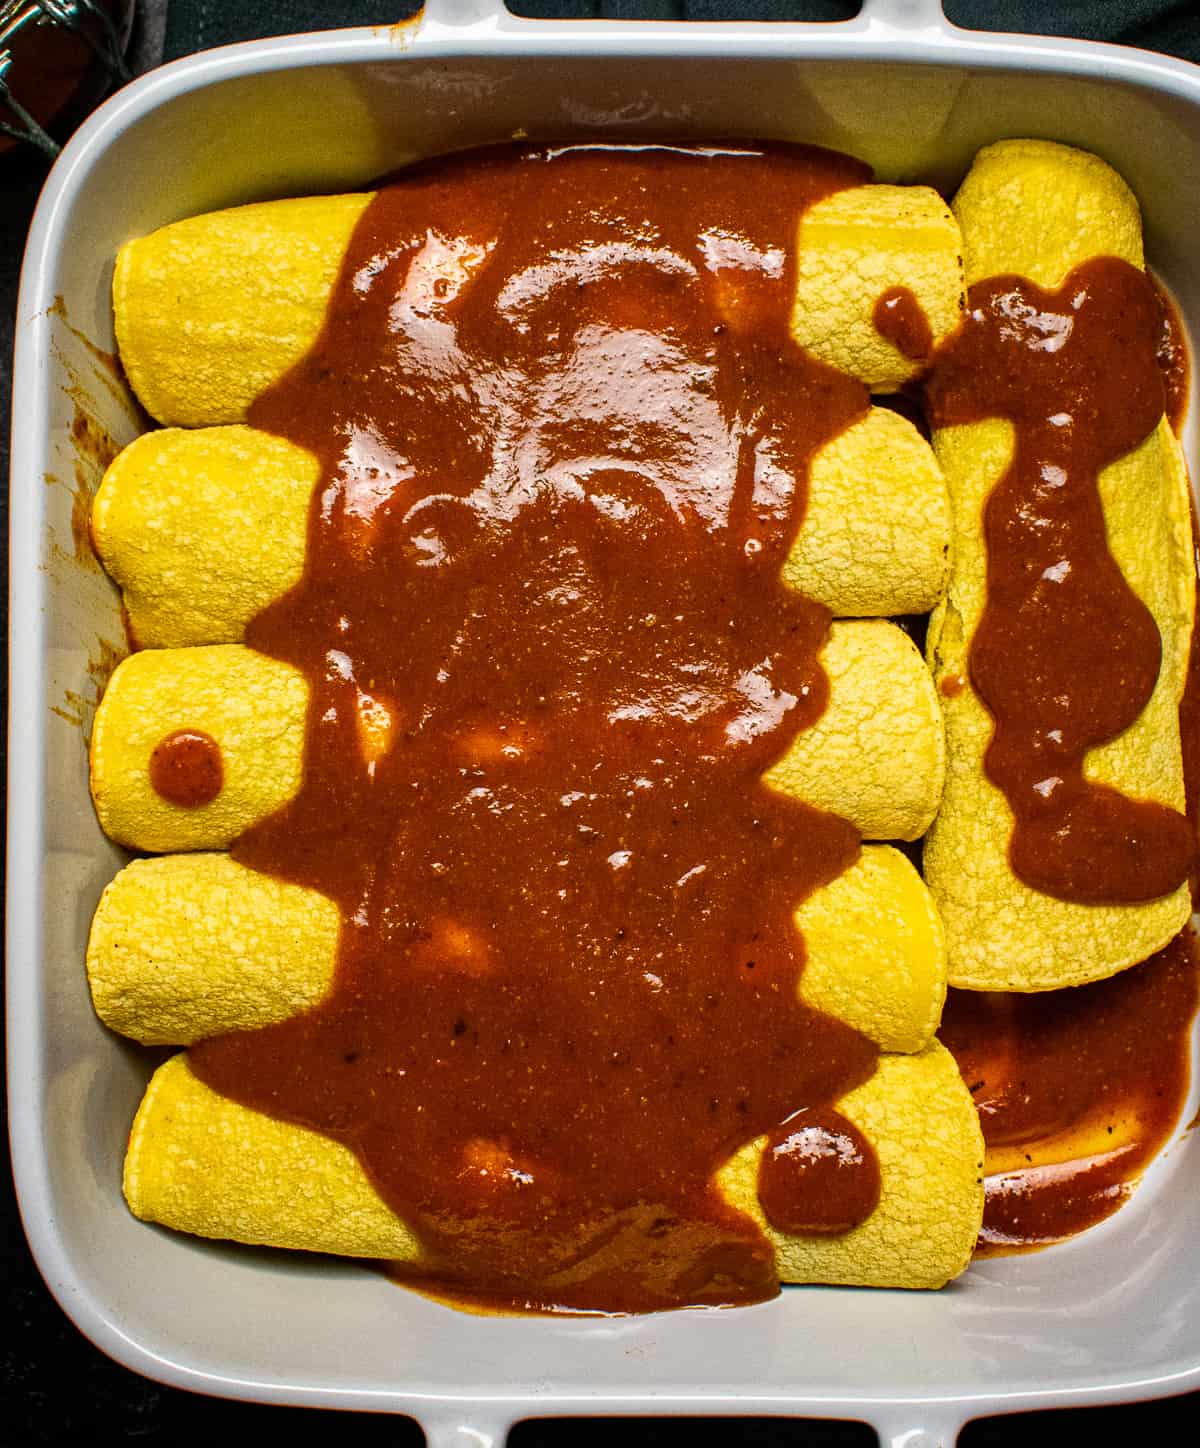 Enchiladas with sauce in baking dish.